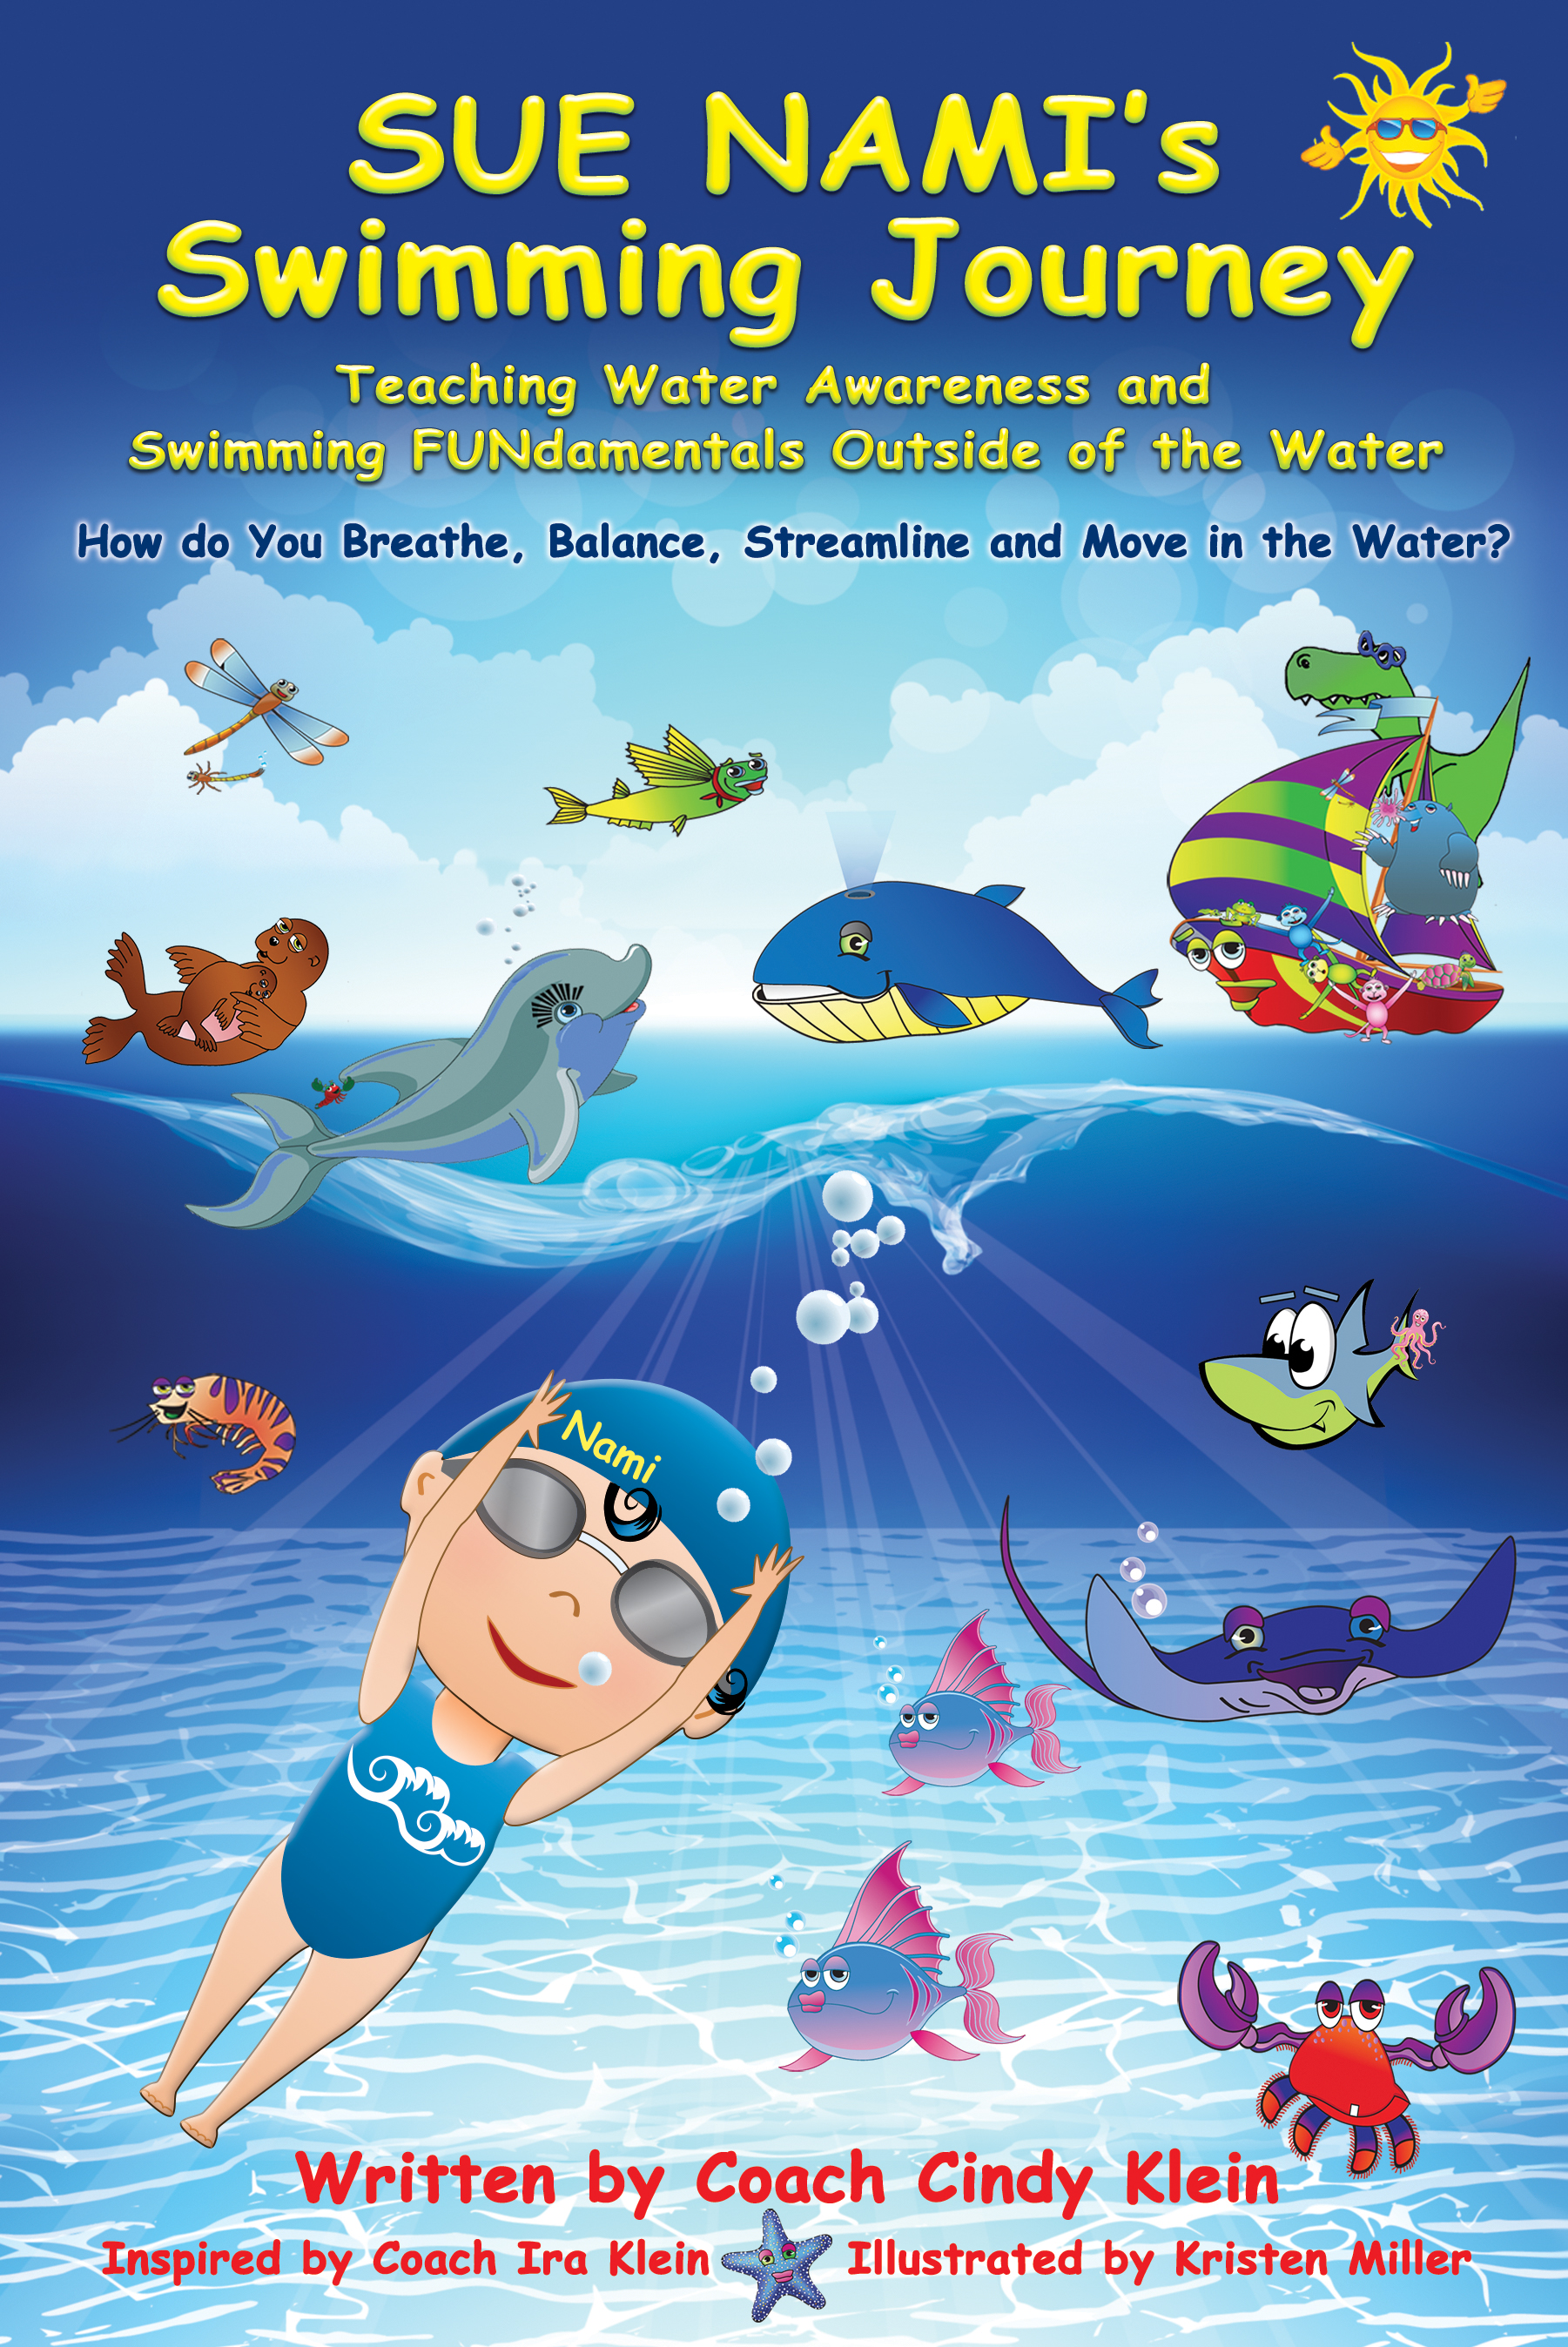 "Sue Nami's Swimming Journey" the BOOK